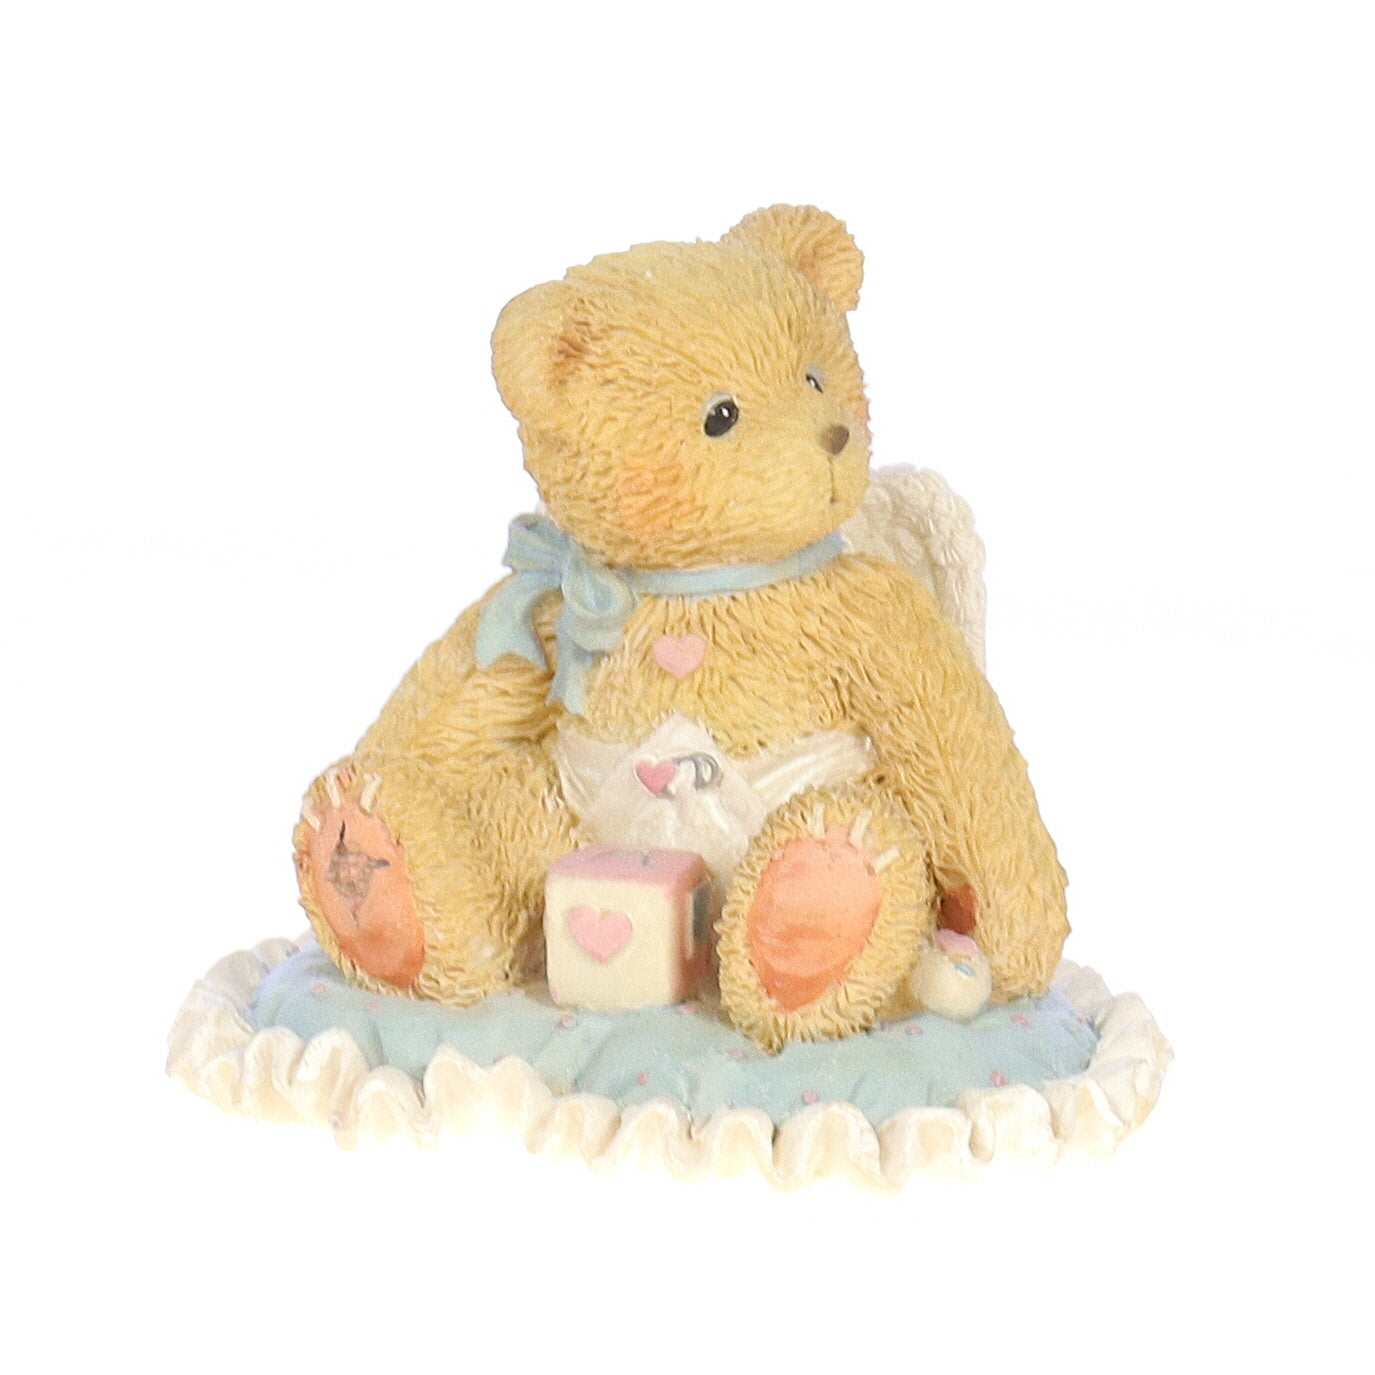 Cherished Teddies Vintage Resin New Baby Figurine 103659 Little Bundle of Joy